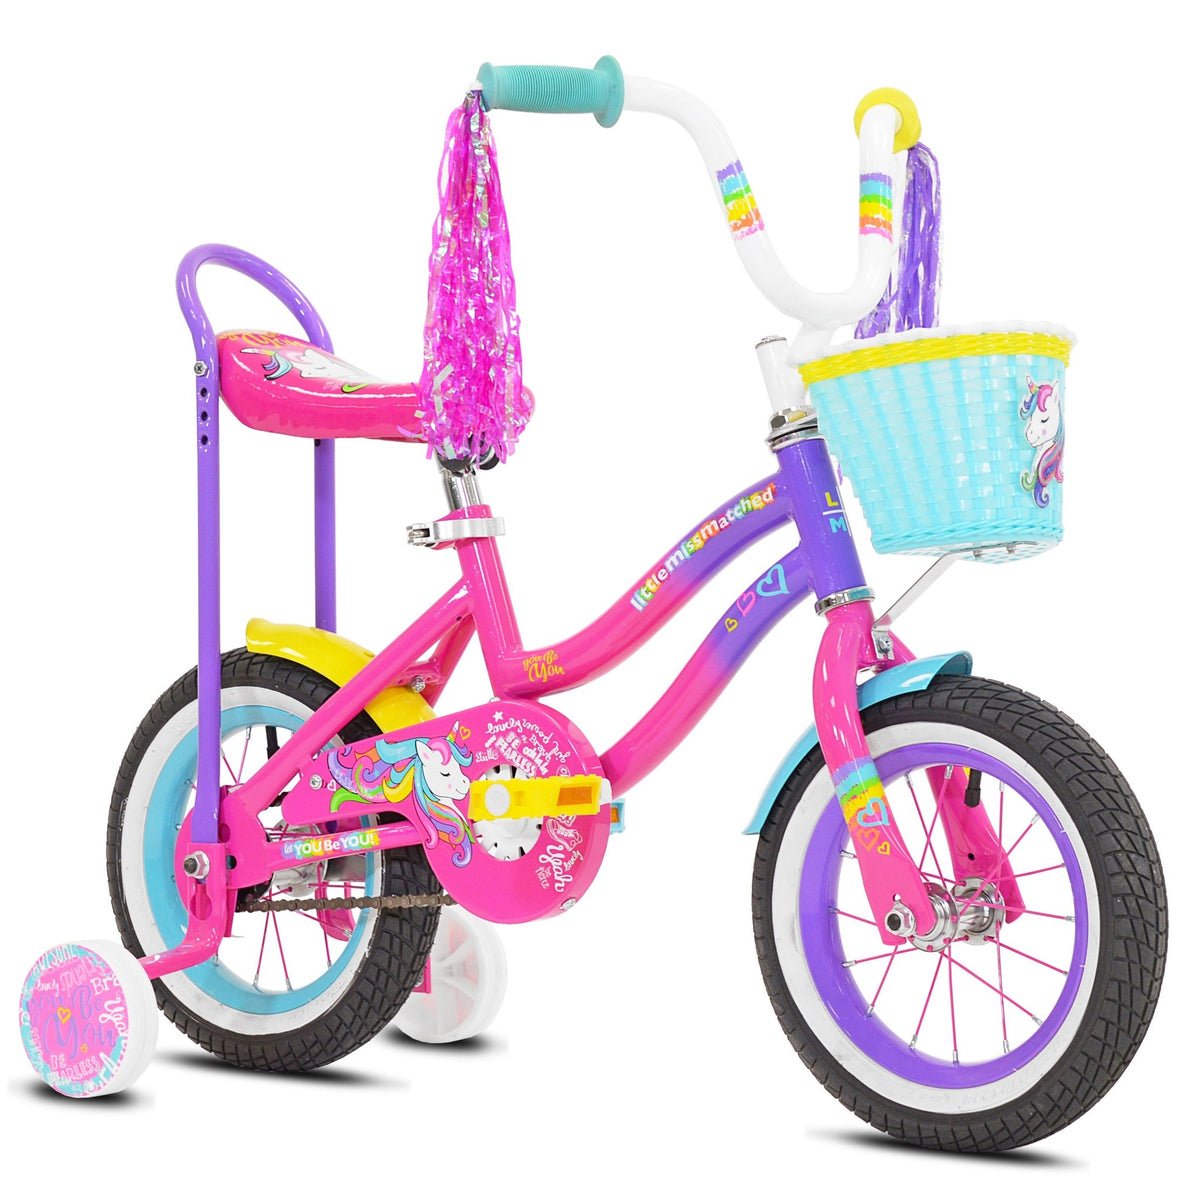 12" LitteMissMatched Unicorn - (Refurbished) | Cruiser Bike for Kids Ages 2-4